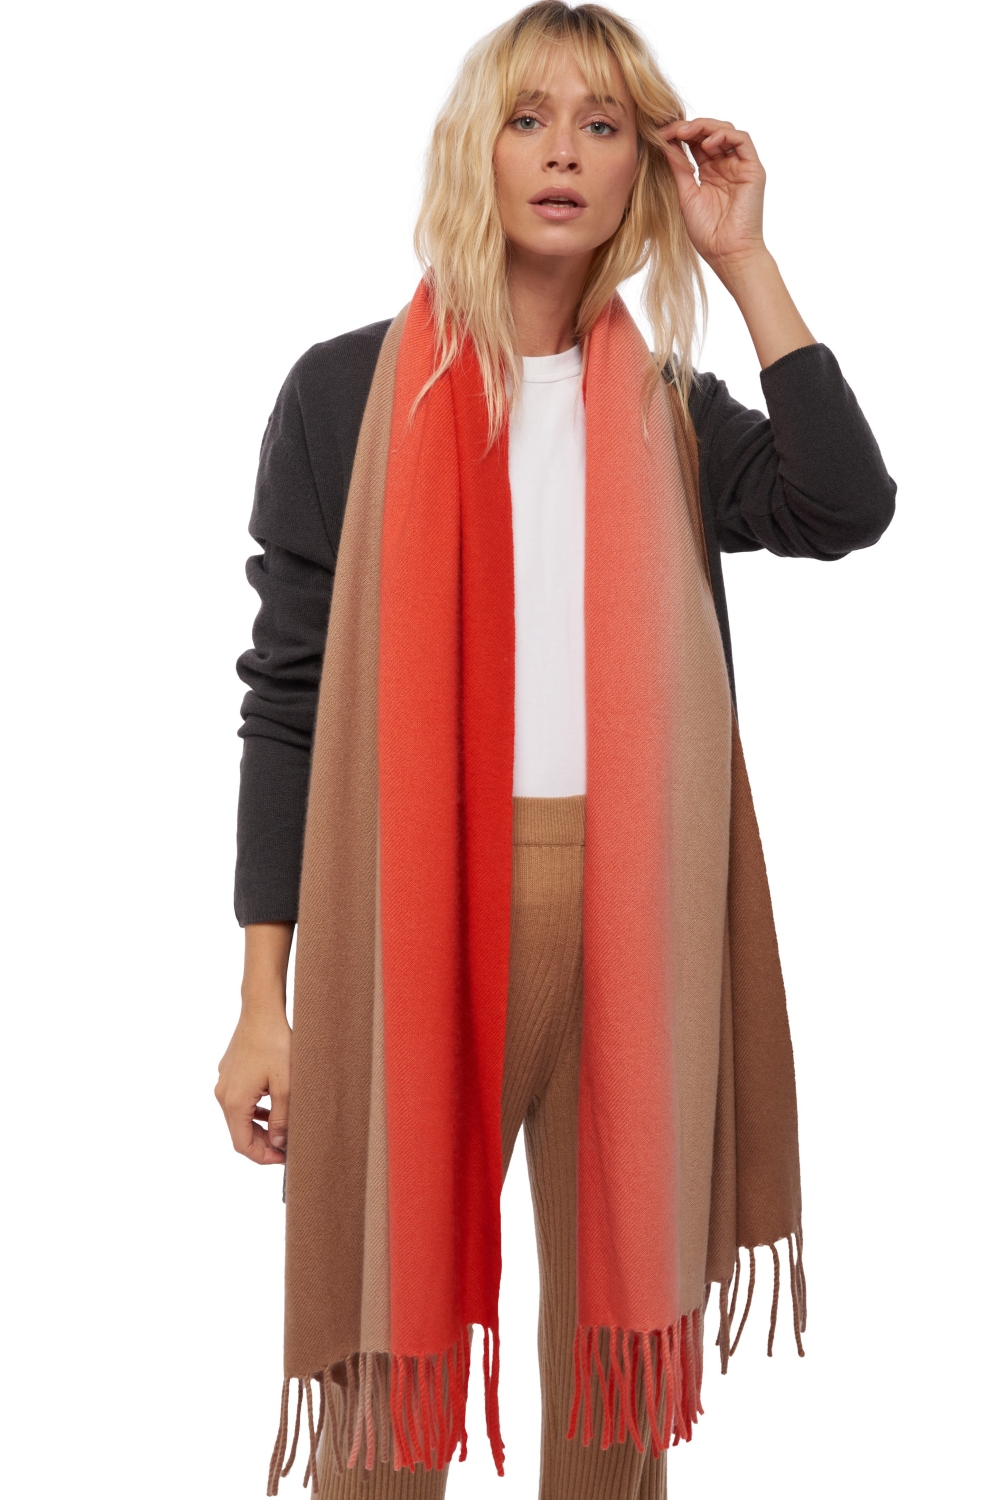 Cashmere ladies shawls vaasa bloody orange camel chine 200 x 70 cm